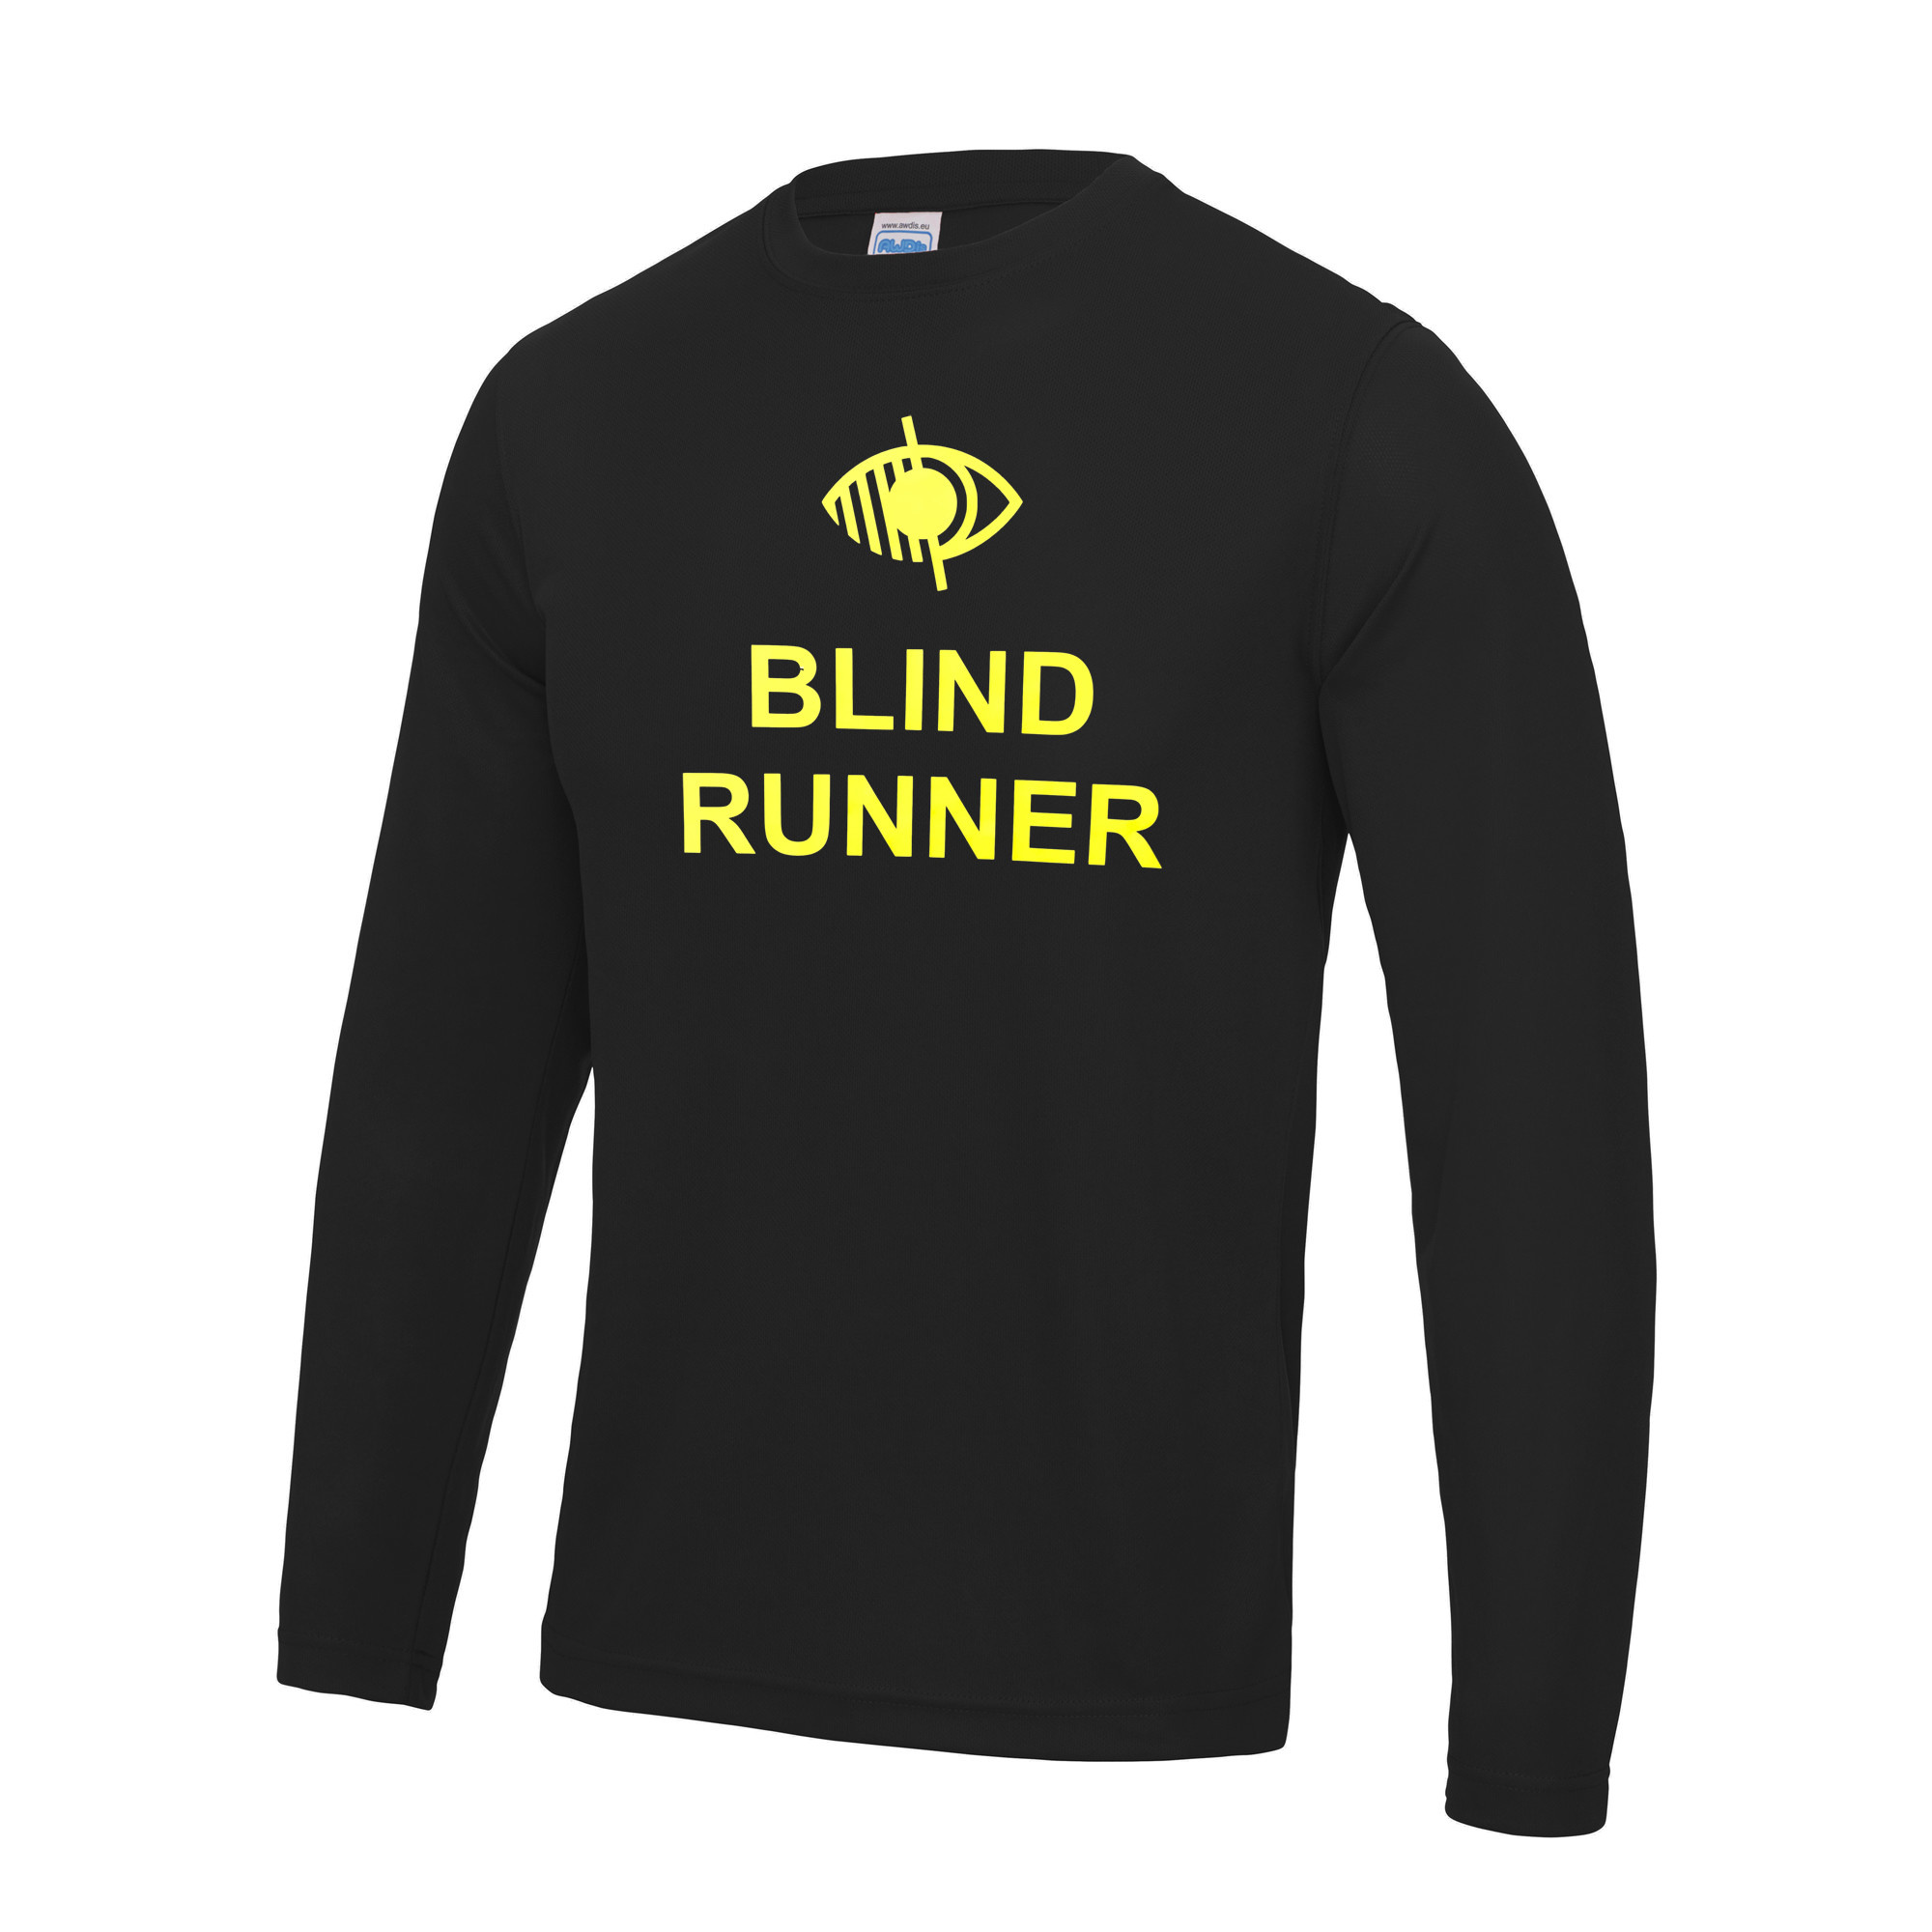 Adults Blind Runner L/S Cool T Shirt